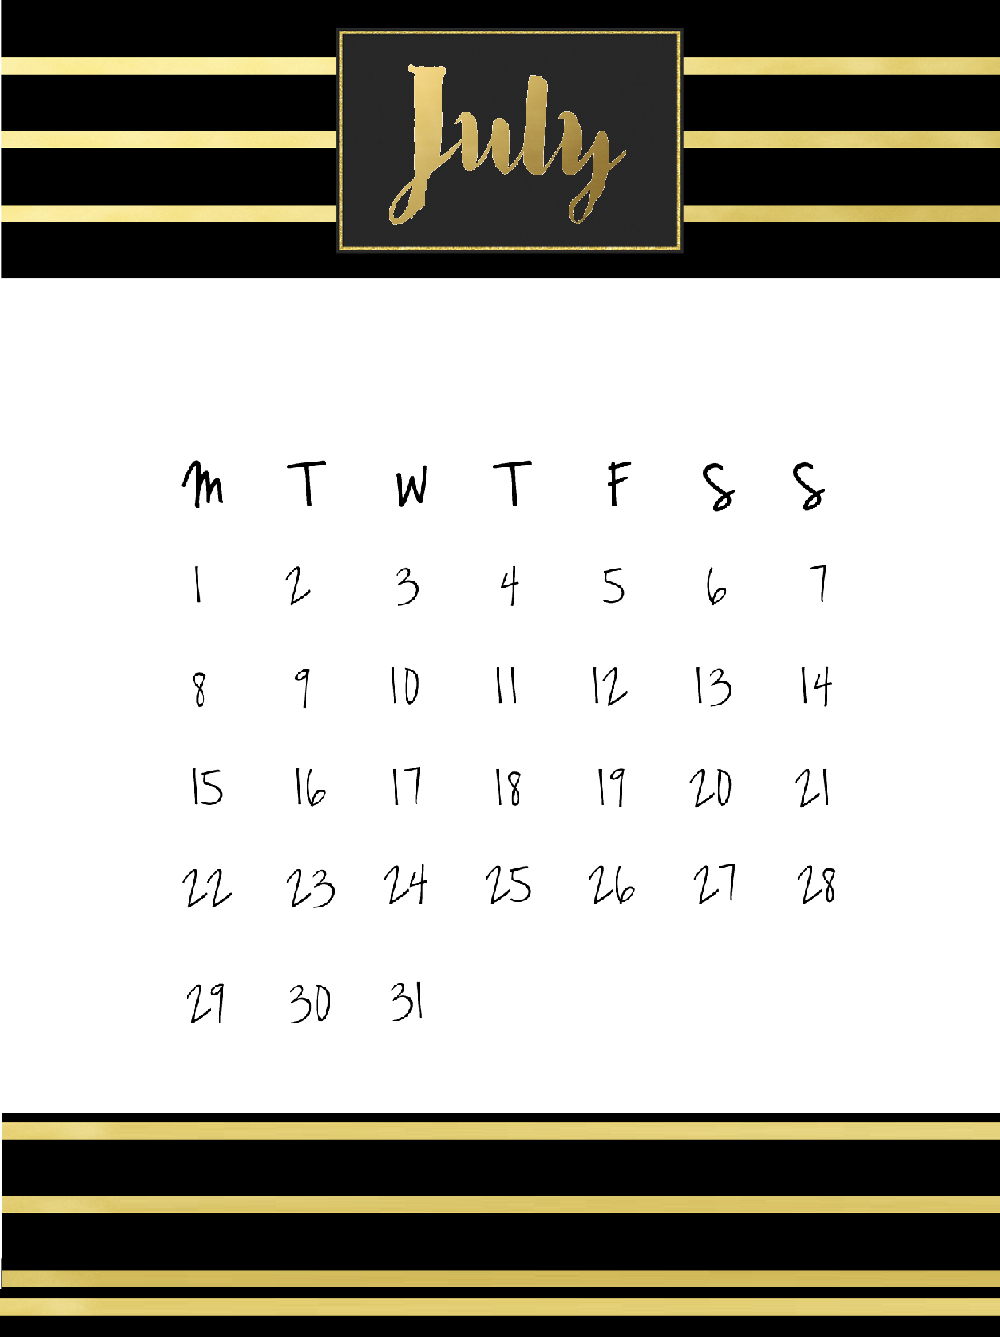 Decorative July 2019 Calendar